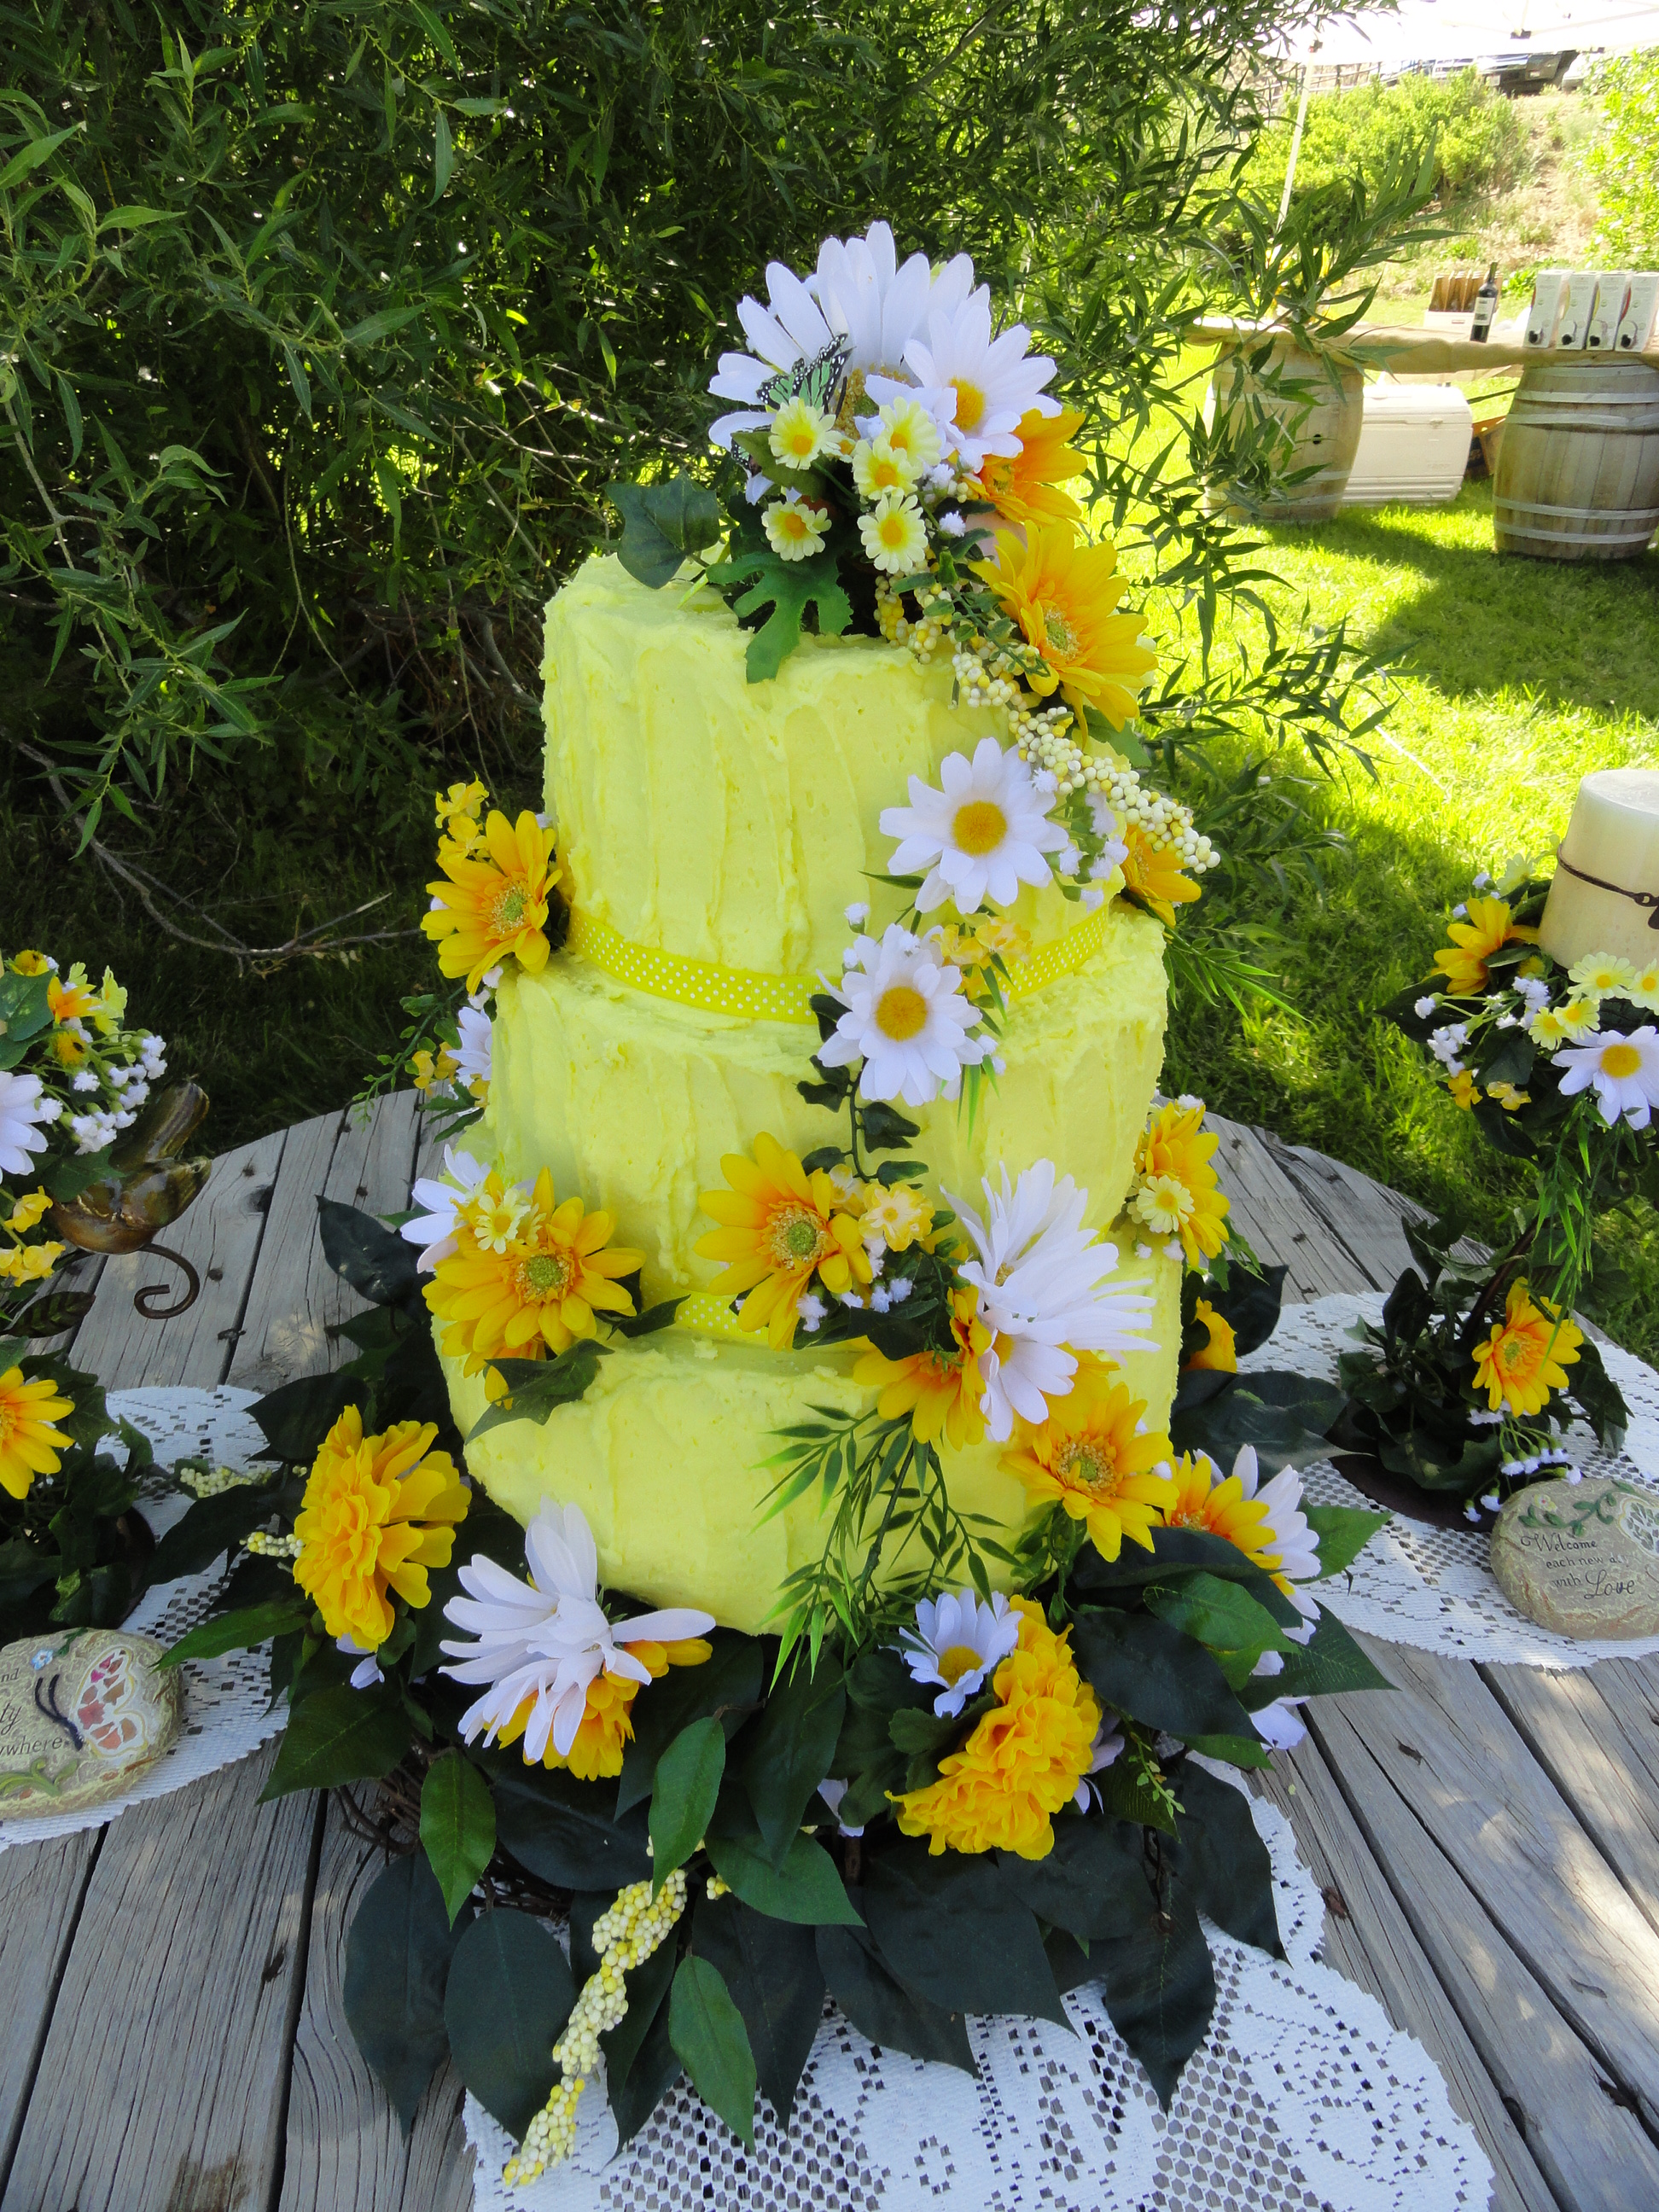 Rustic Flower Wedding Cake